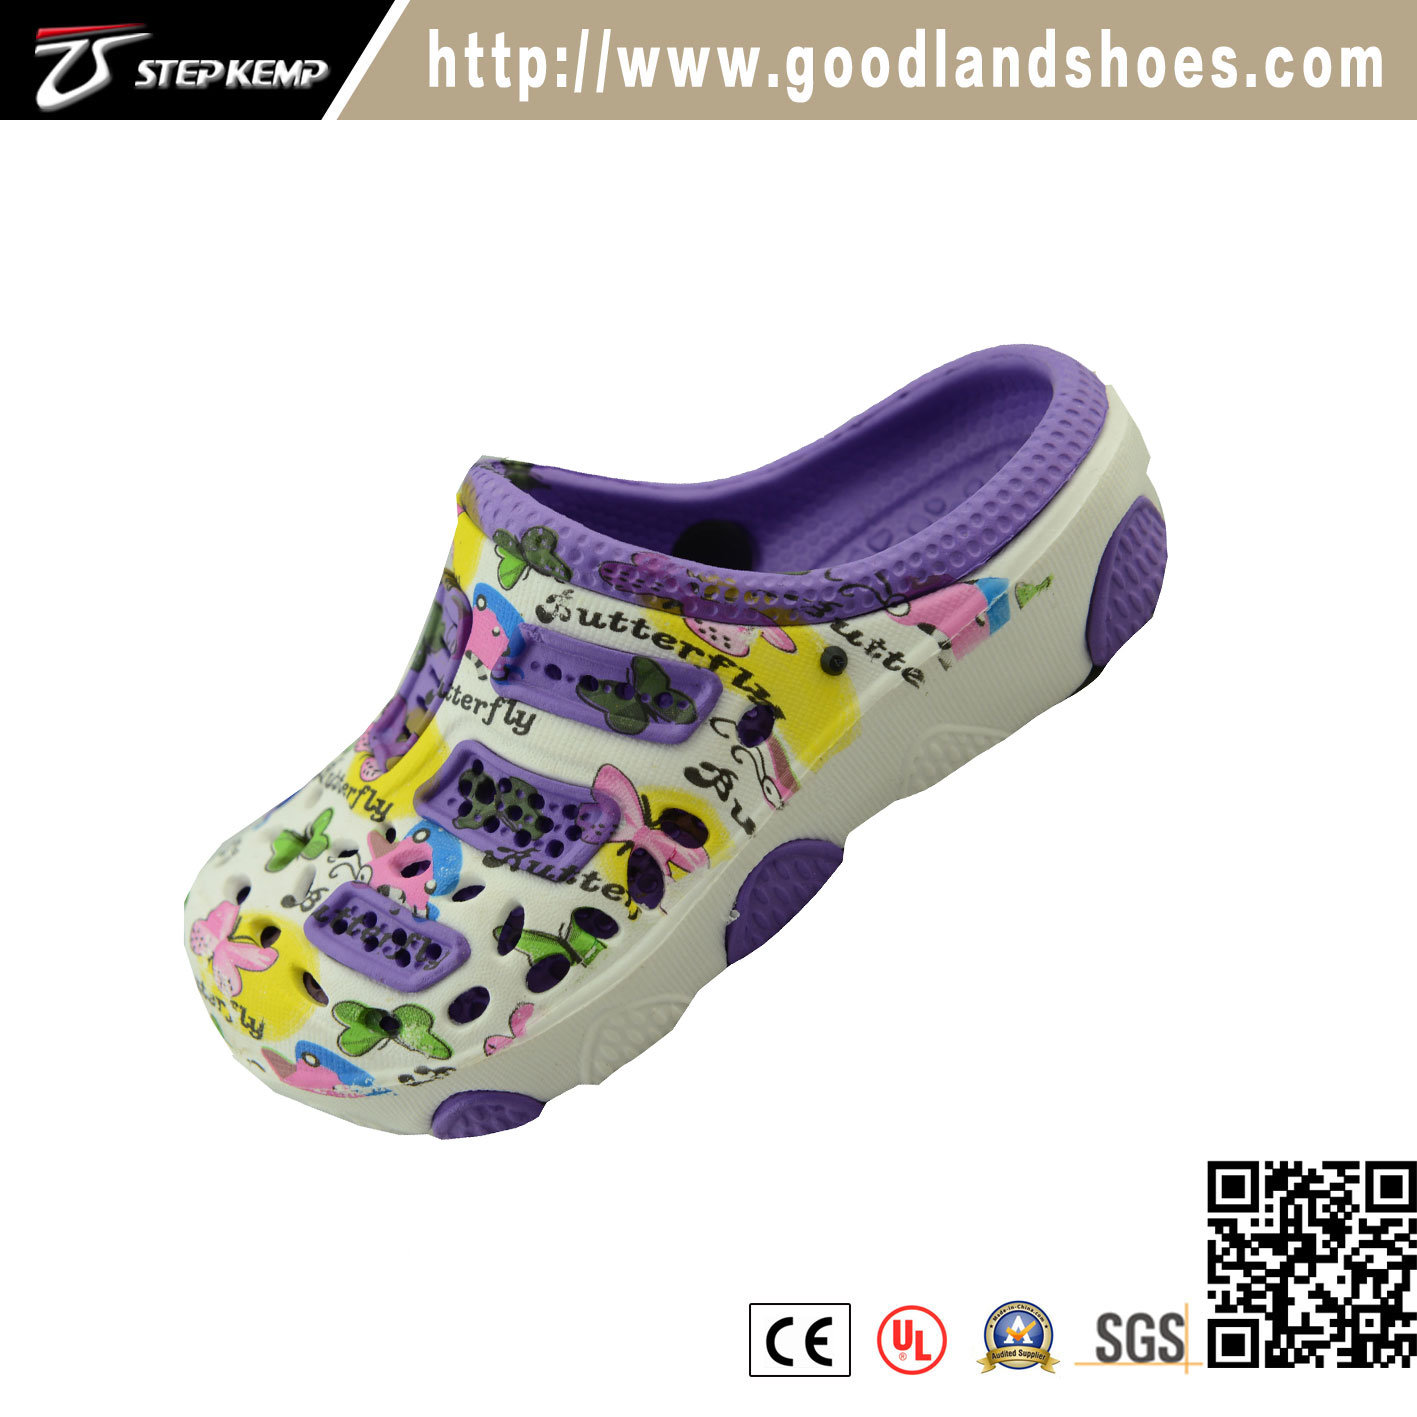 Graden Chirldren Casual Decorative Pattern Purplr Shoes 20292